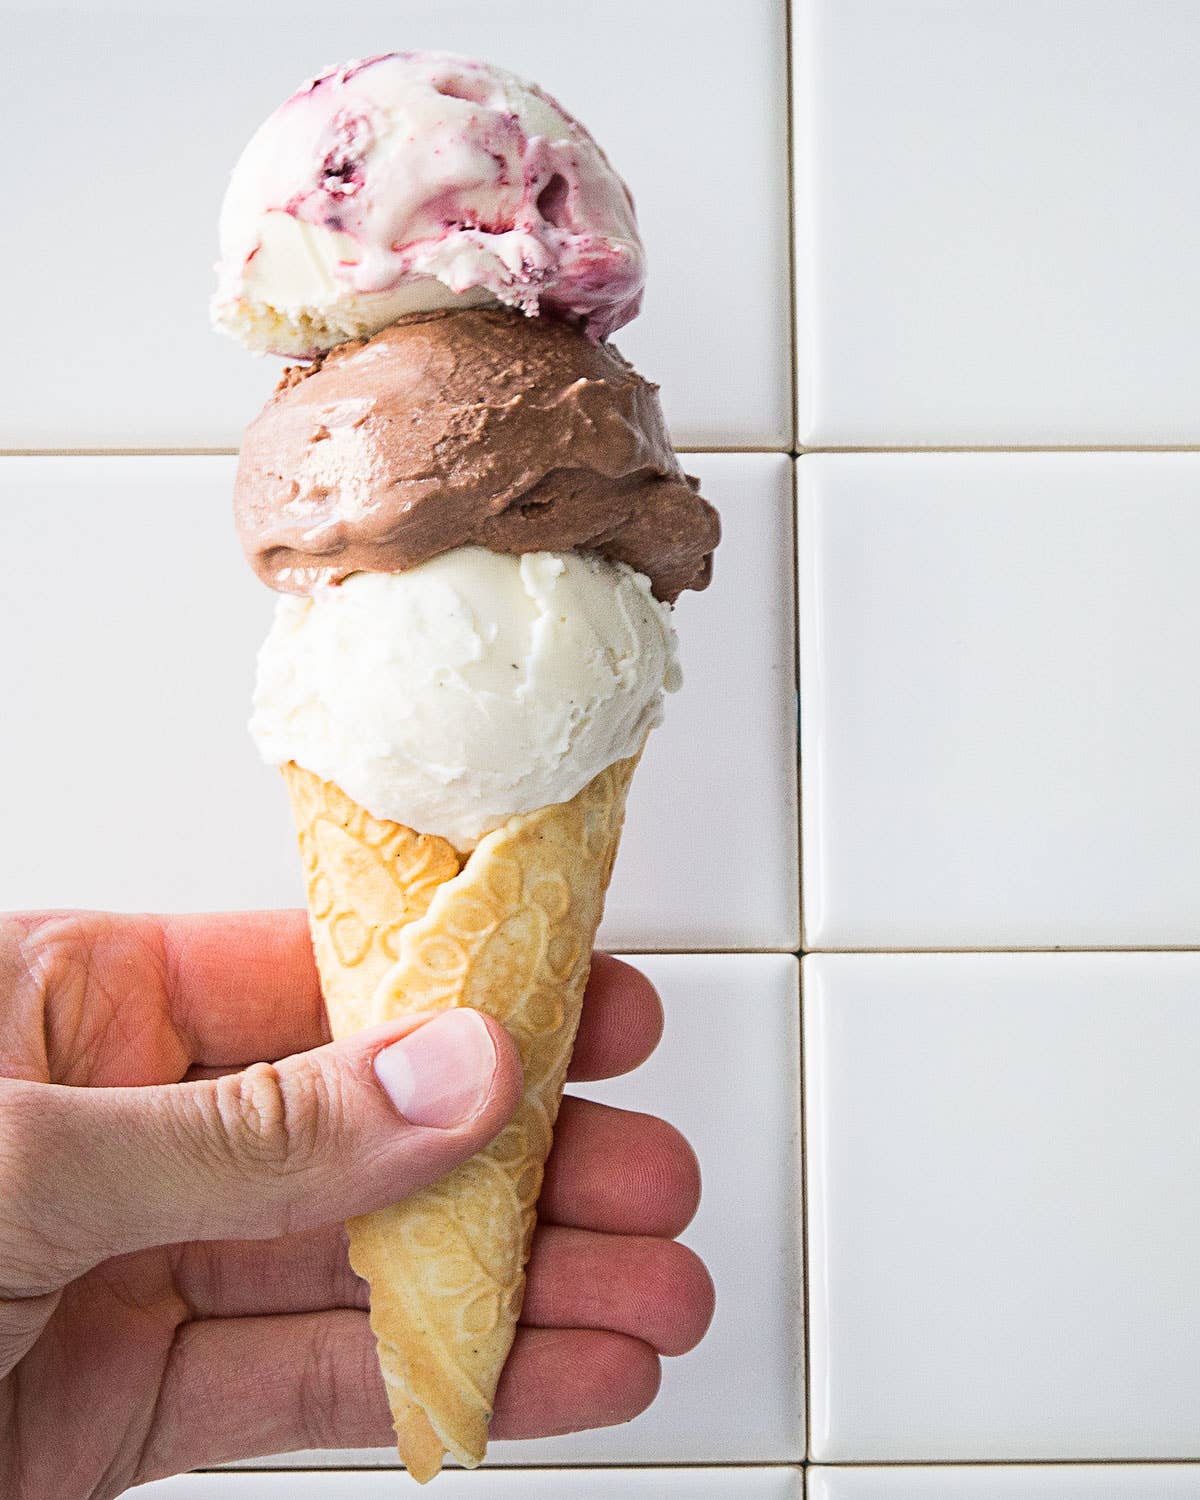 Video: How to Make Ice Cream Cones